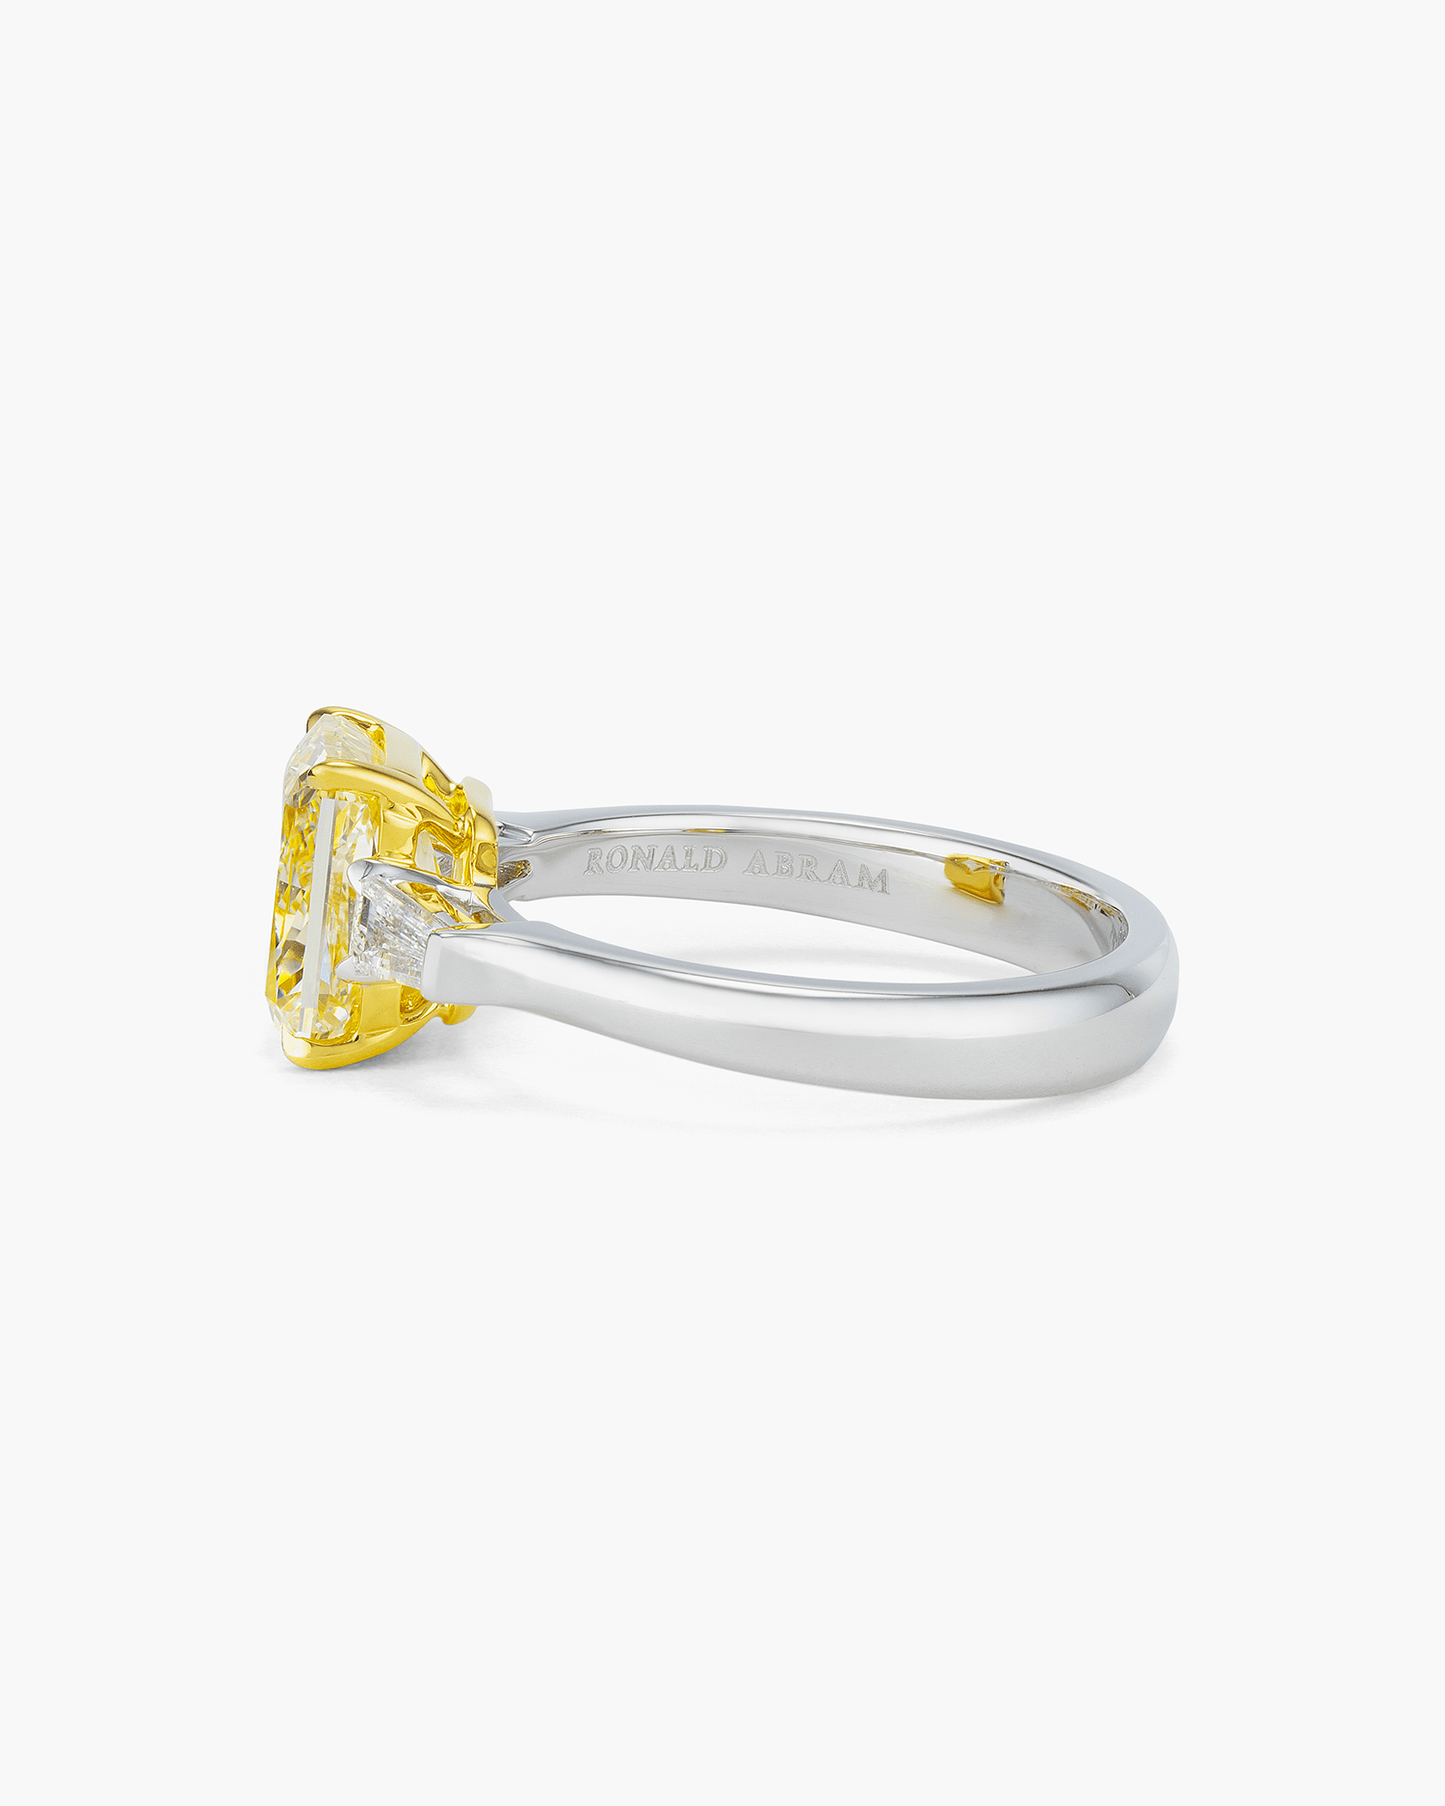 2.15 carat Radiant Cut Yellow and White Diamond Ring